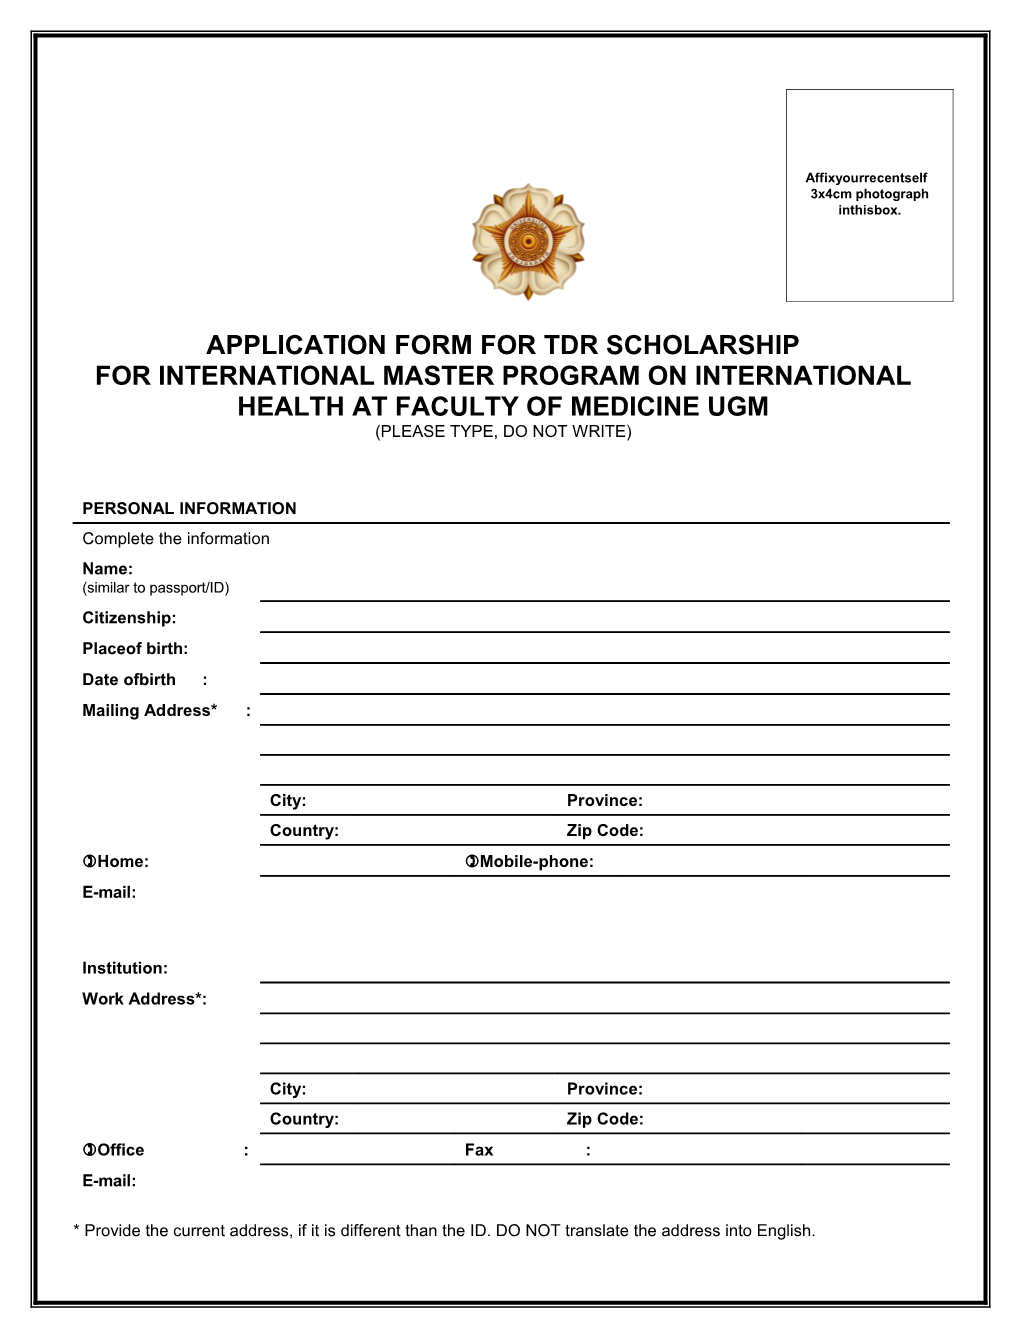 Tdr Scholarship Applicationform for International Master Program on International Health